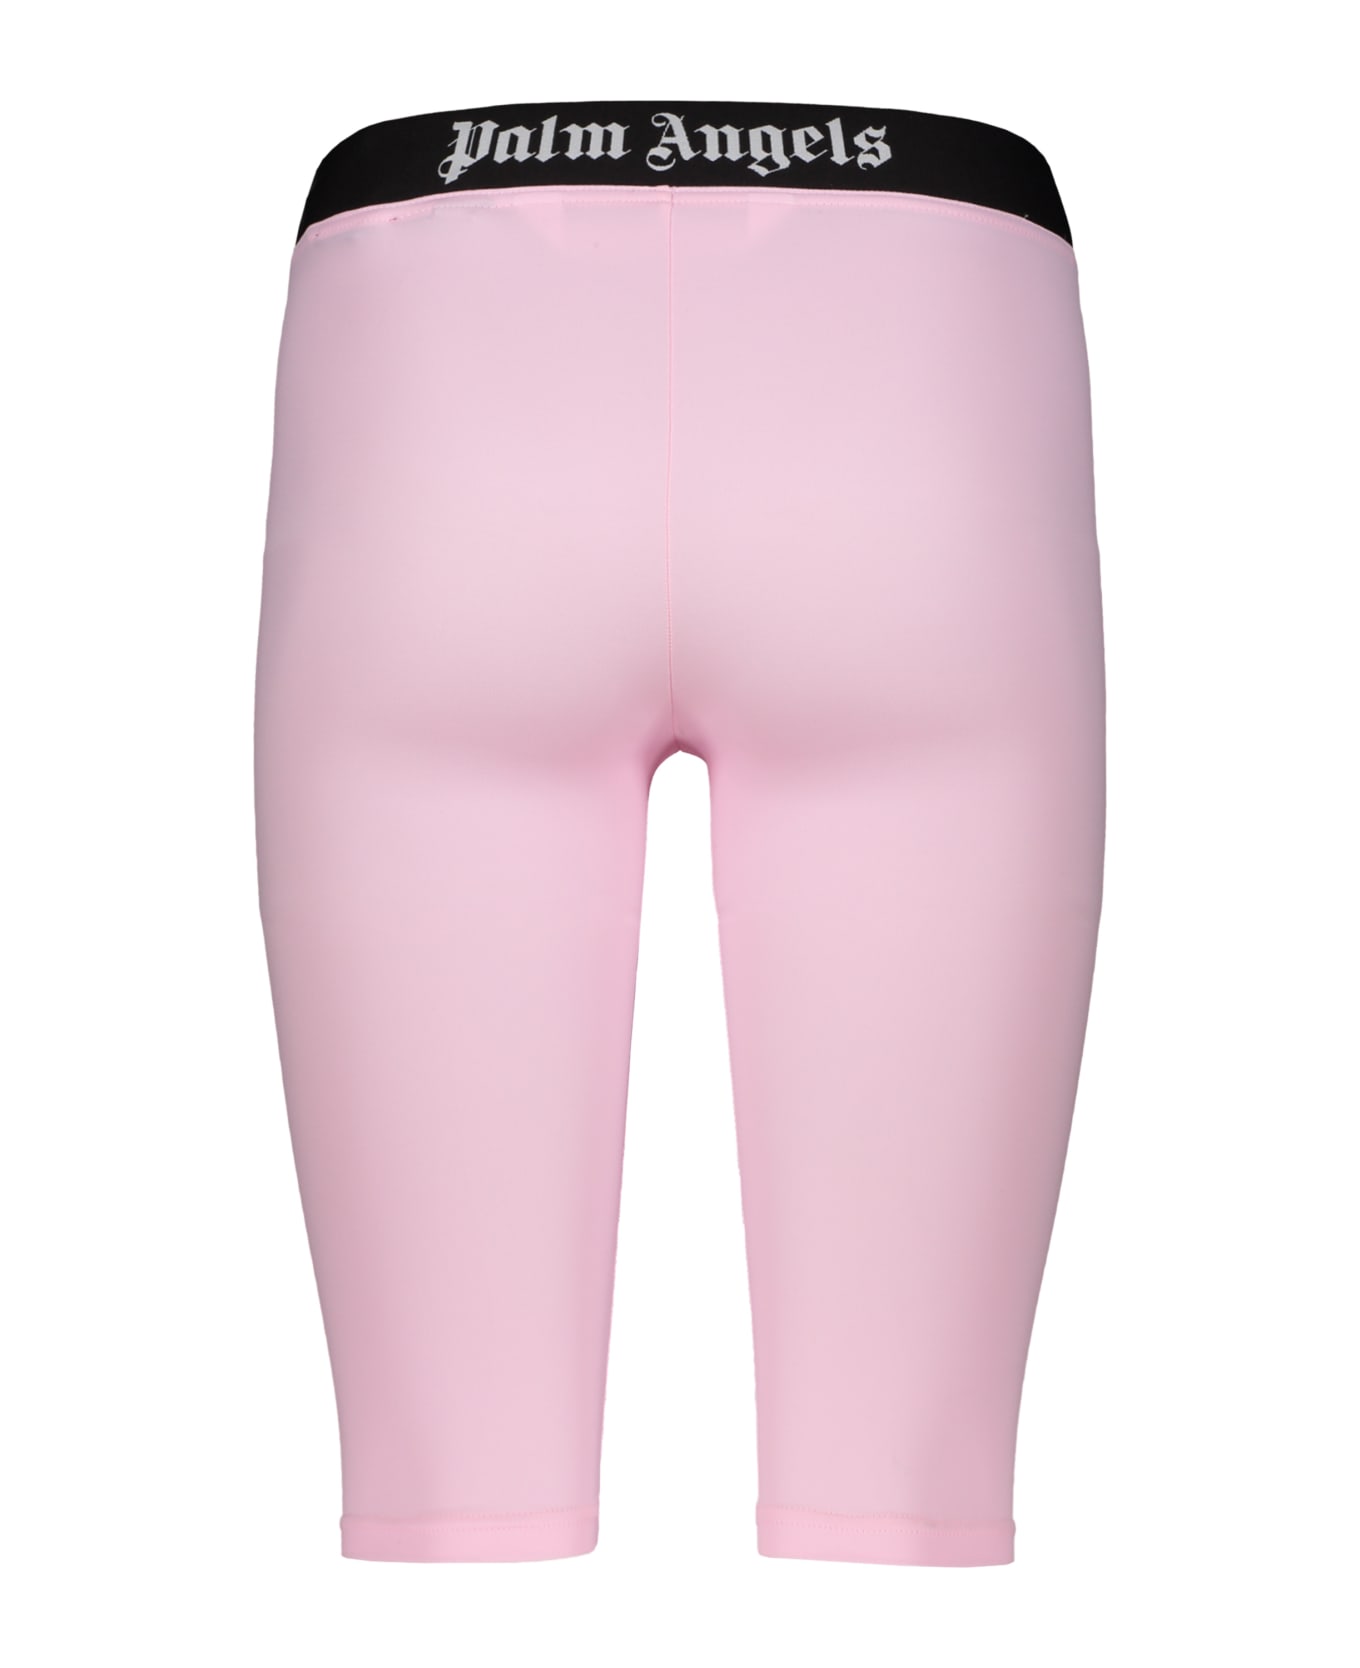 Palm Angels Logo Print Shorts - Pink ショーツ